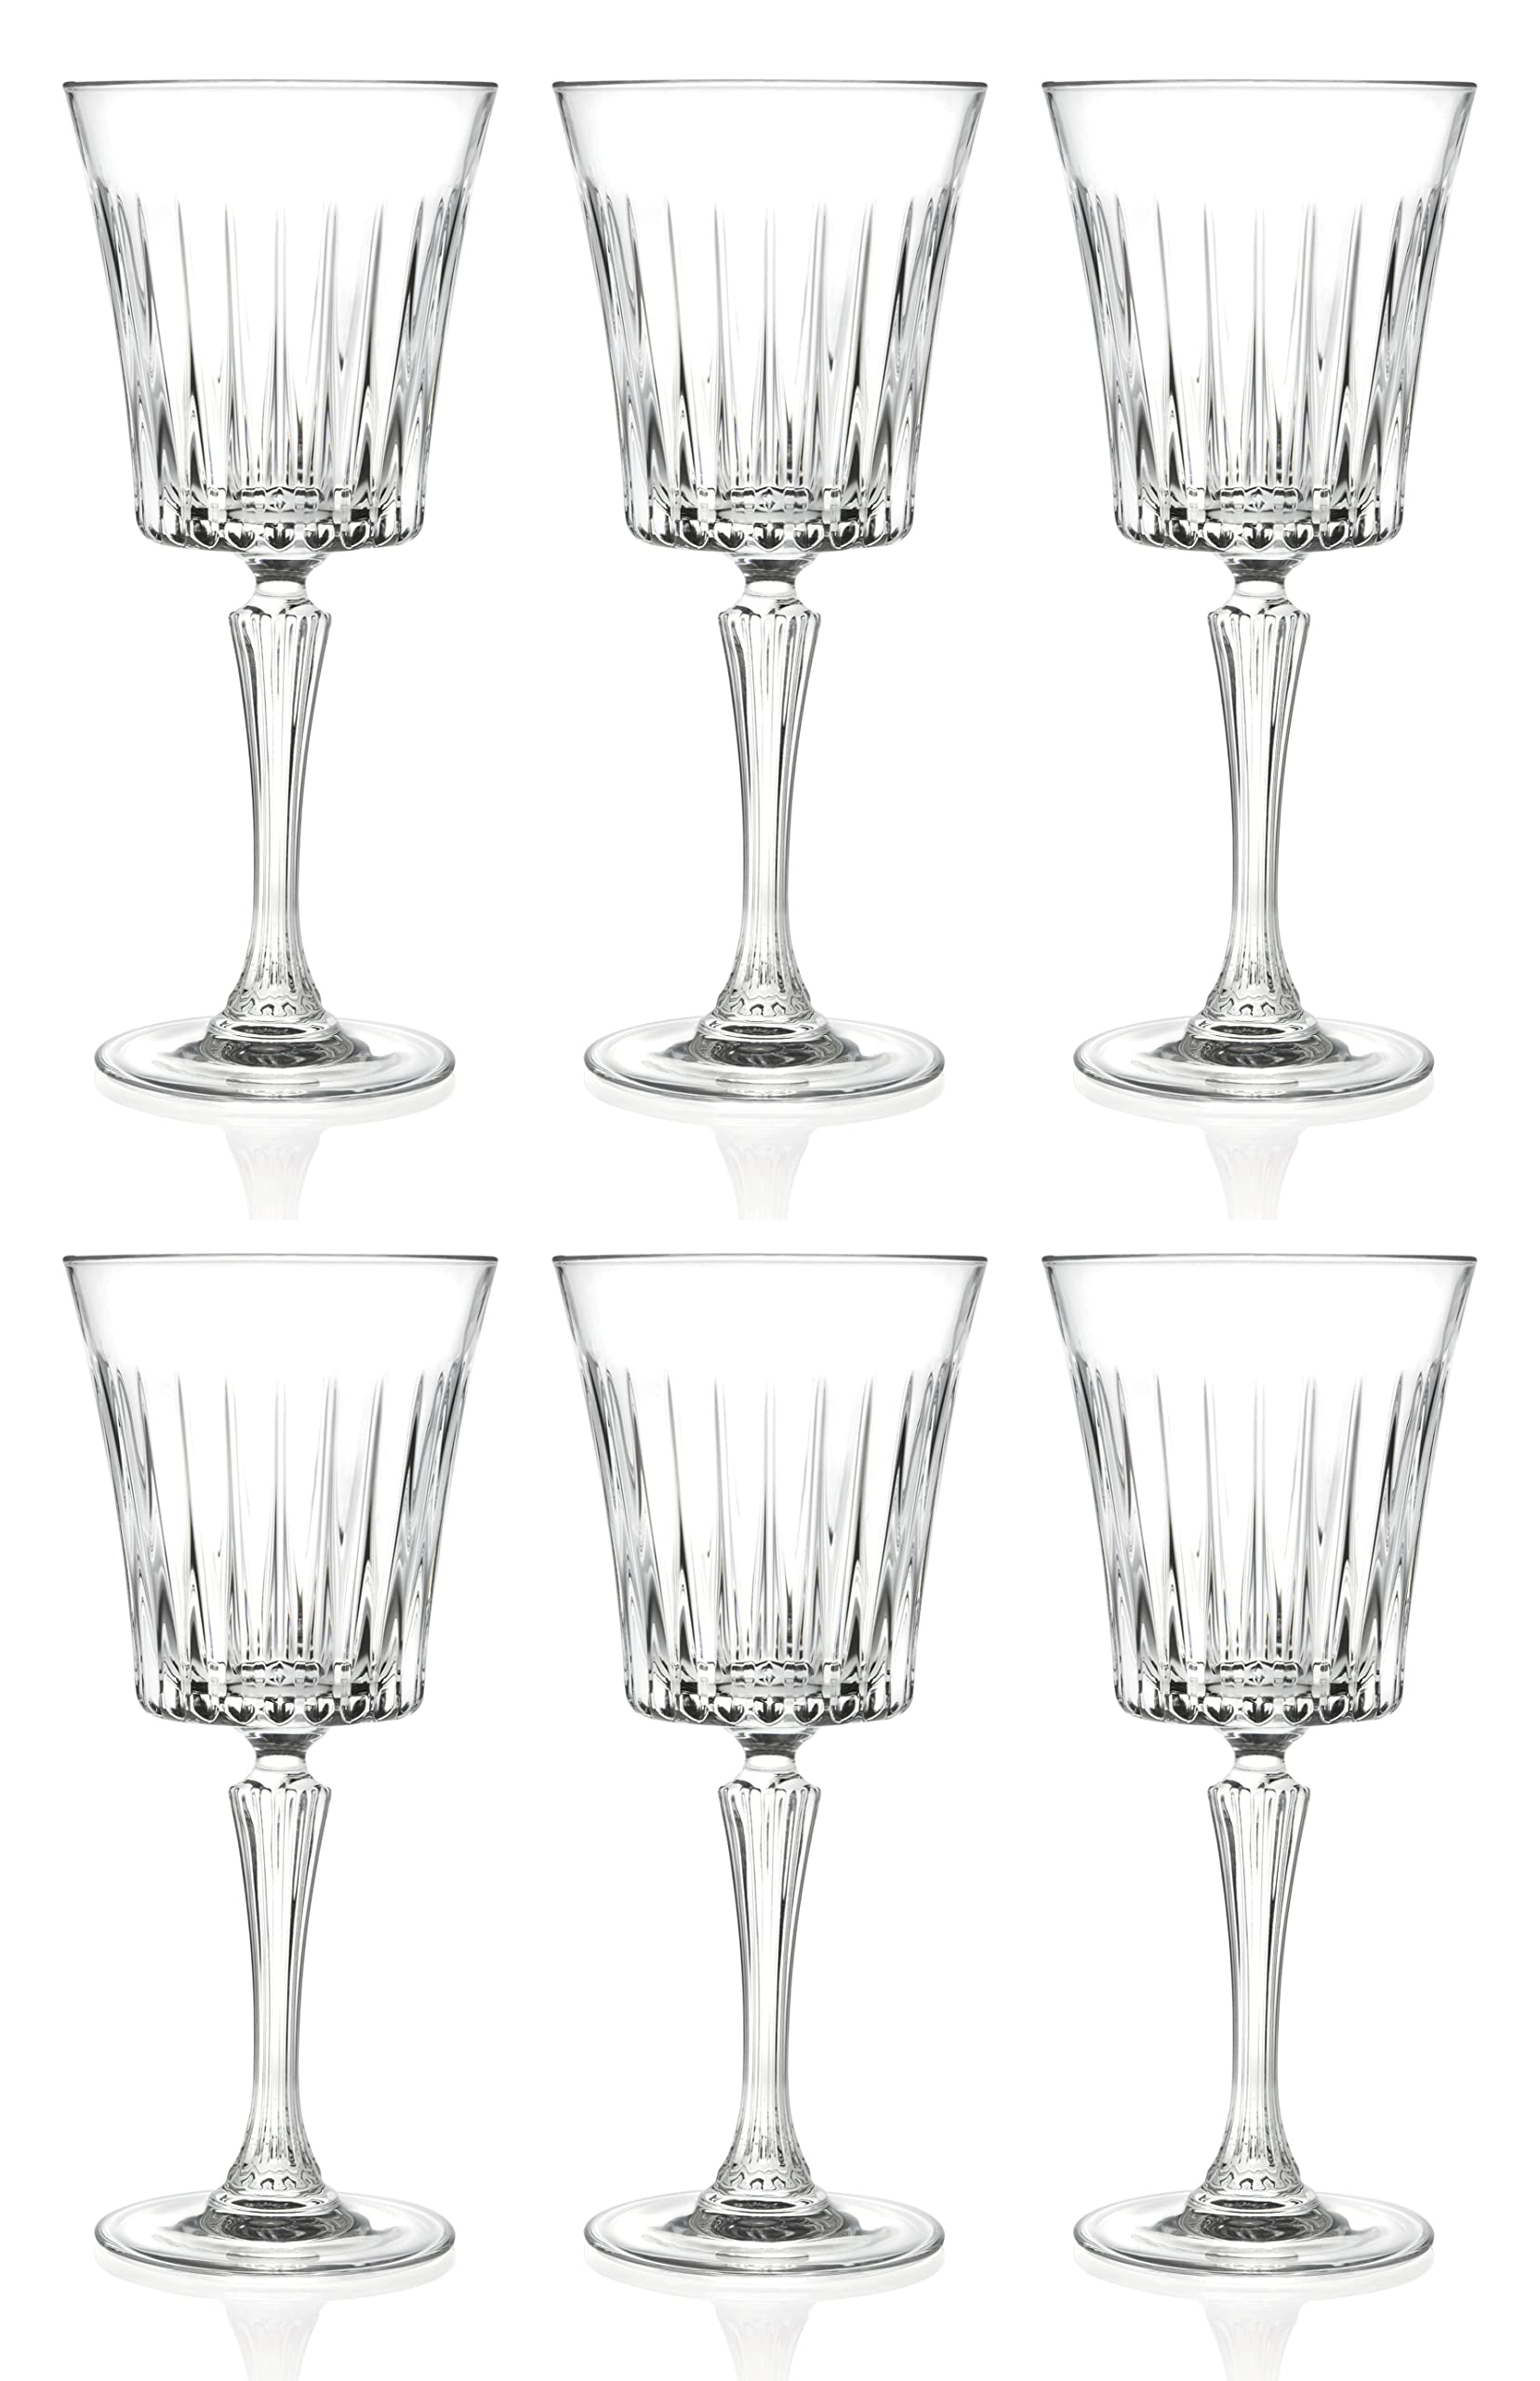 Barski Wine Glass - Goblet - Red Wine - White Wine - Water Glass - Stemmed Glasses - Set of 6 Goblets - Crystal like Glass - 7 oz. Beautifully Designed Made in Europe